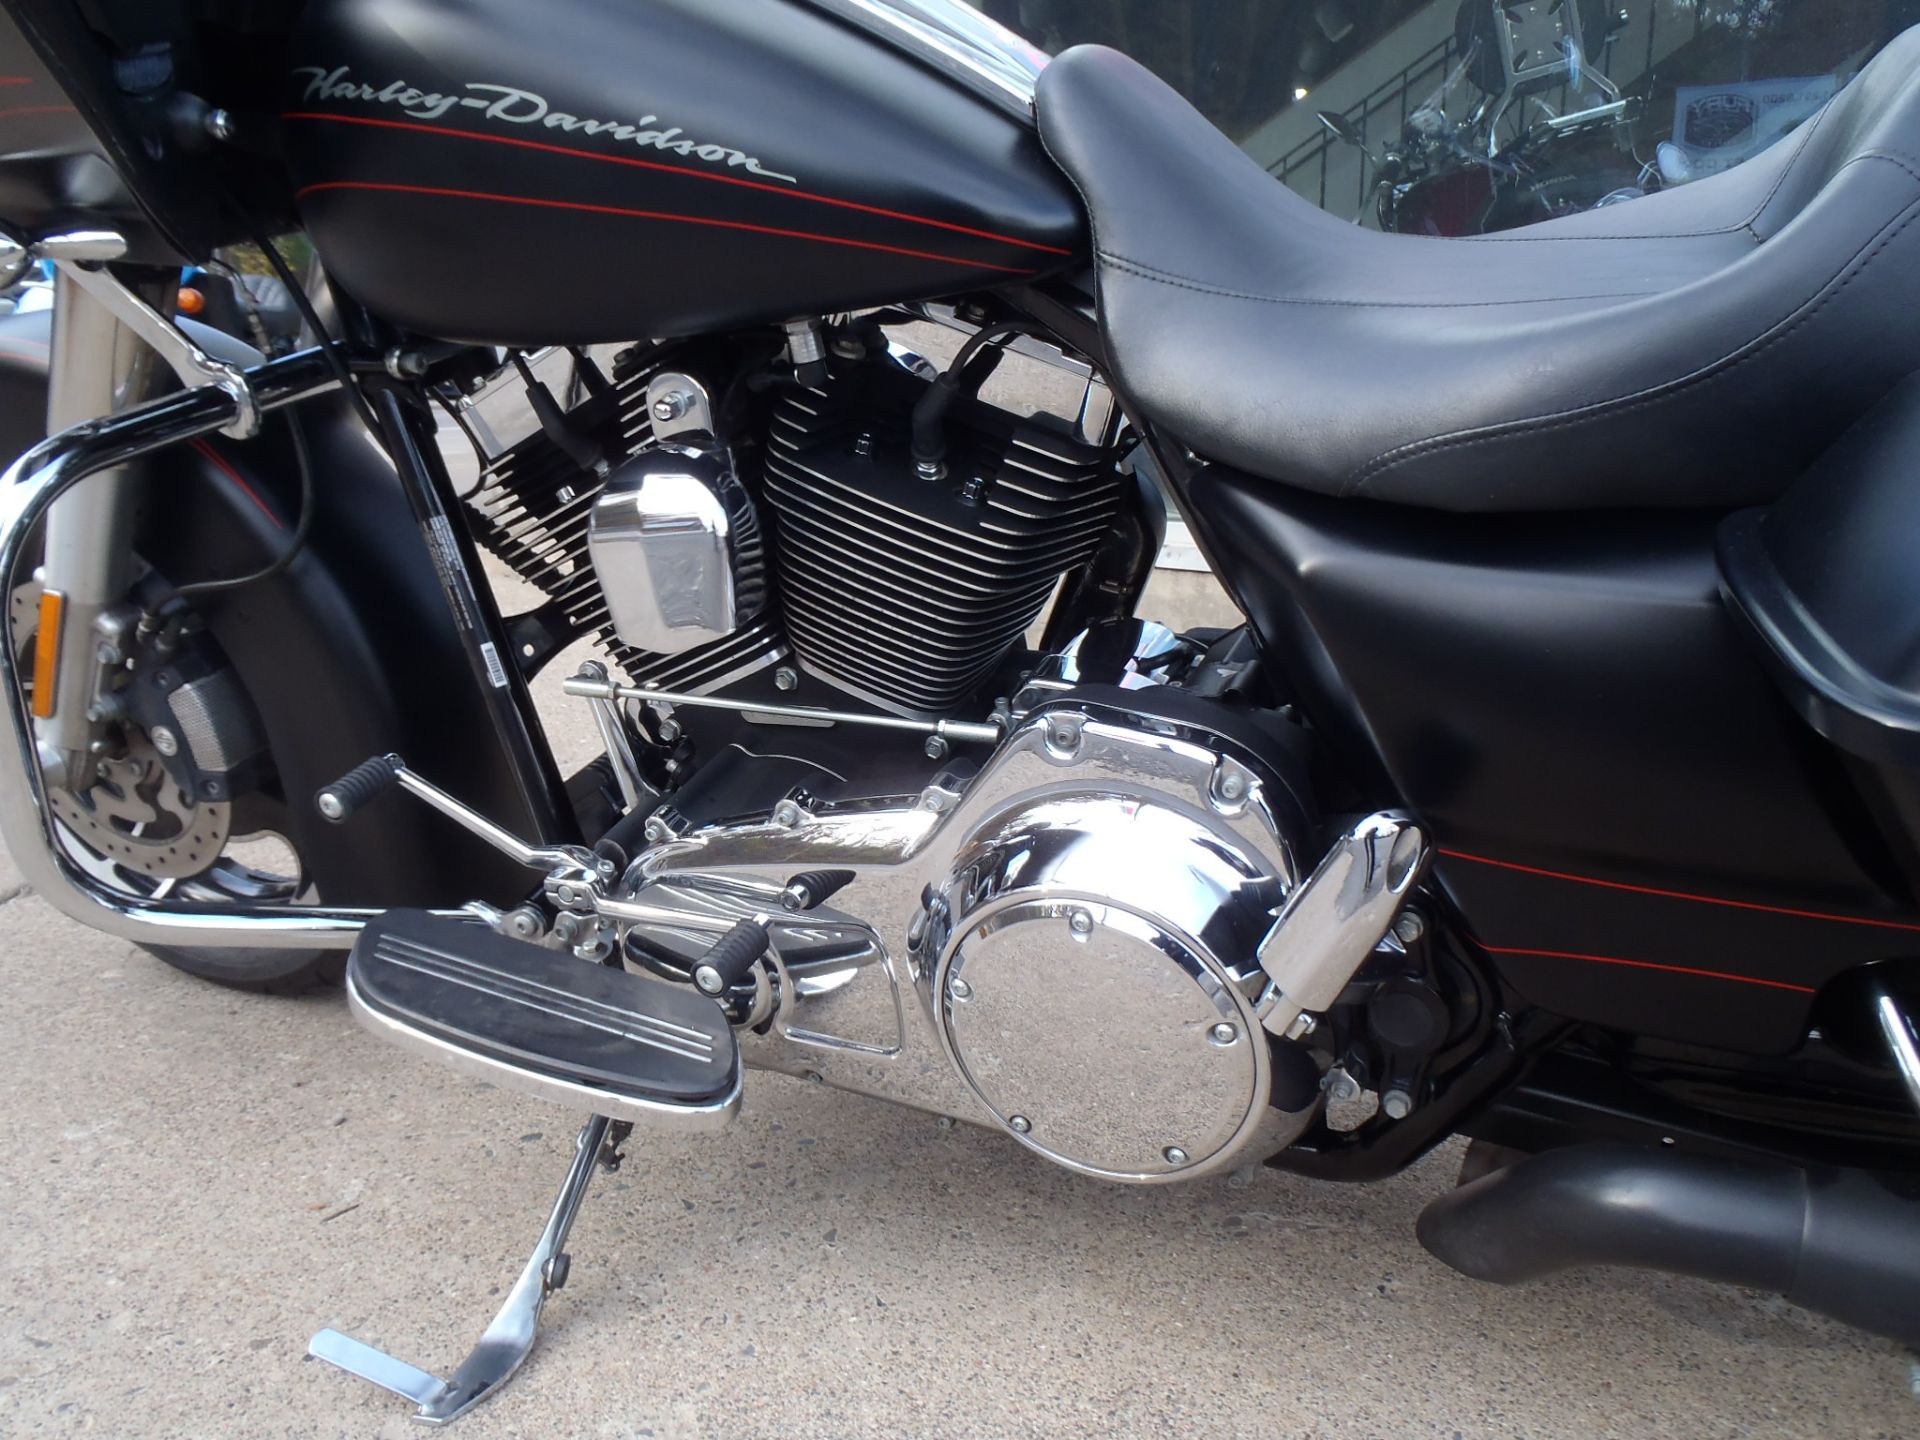 2011 Harley-Davidson Road Glide® Custom in South Saint Paul, Minnesota - Photo 16